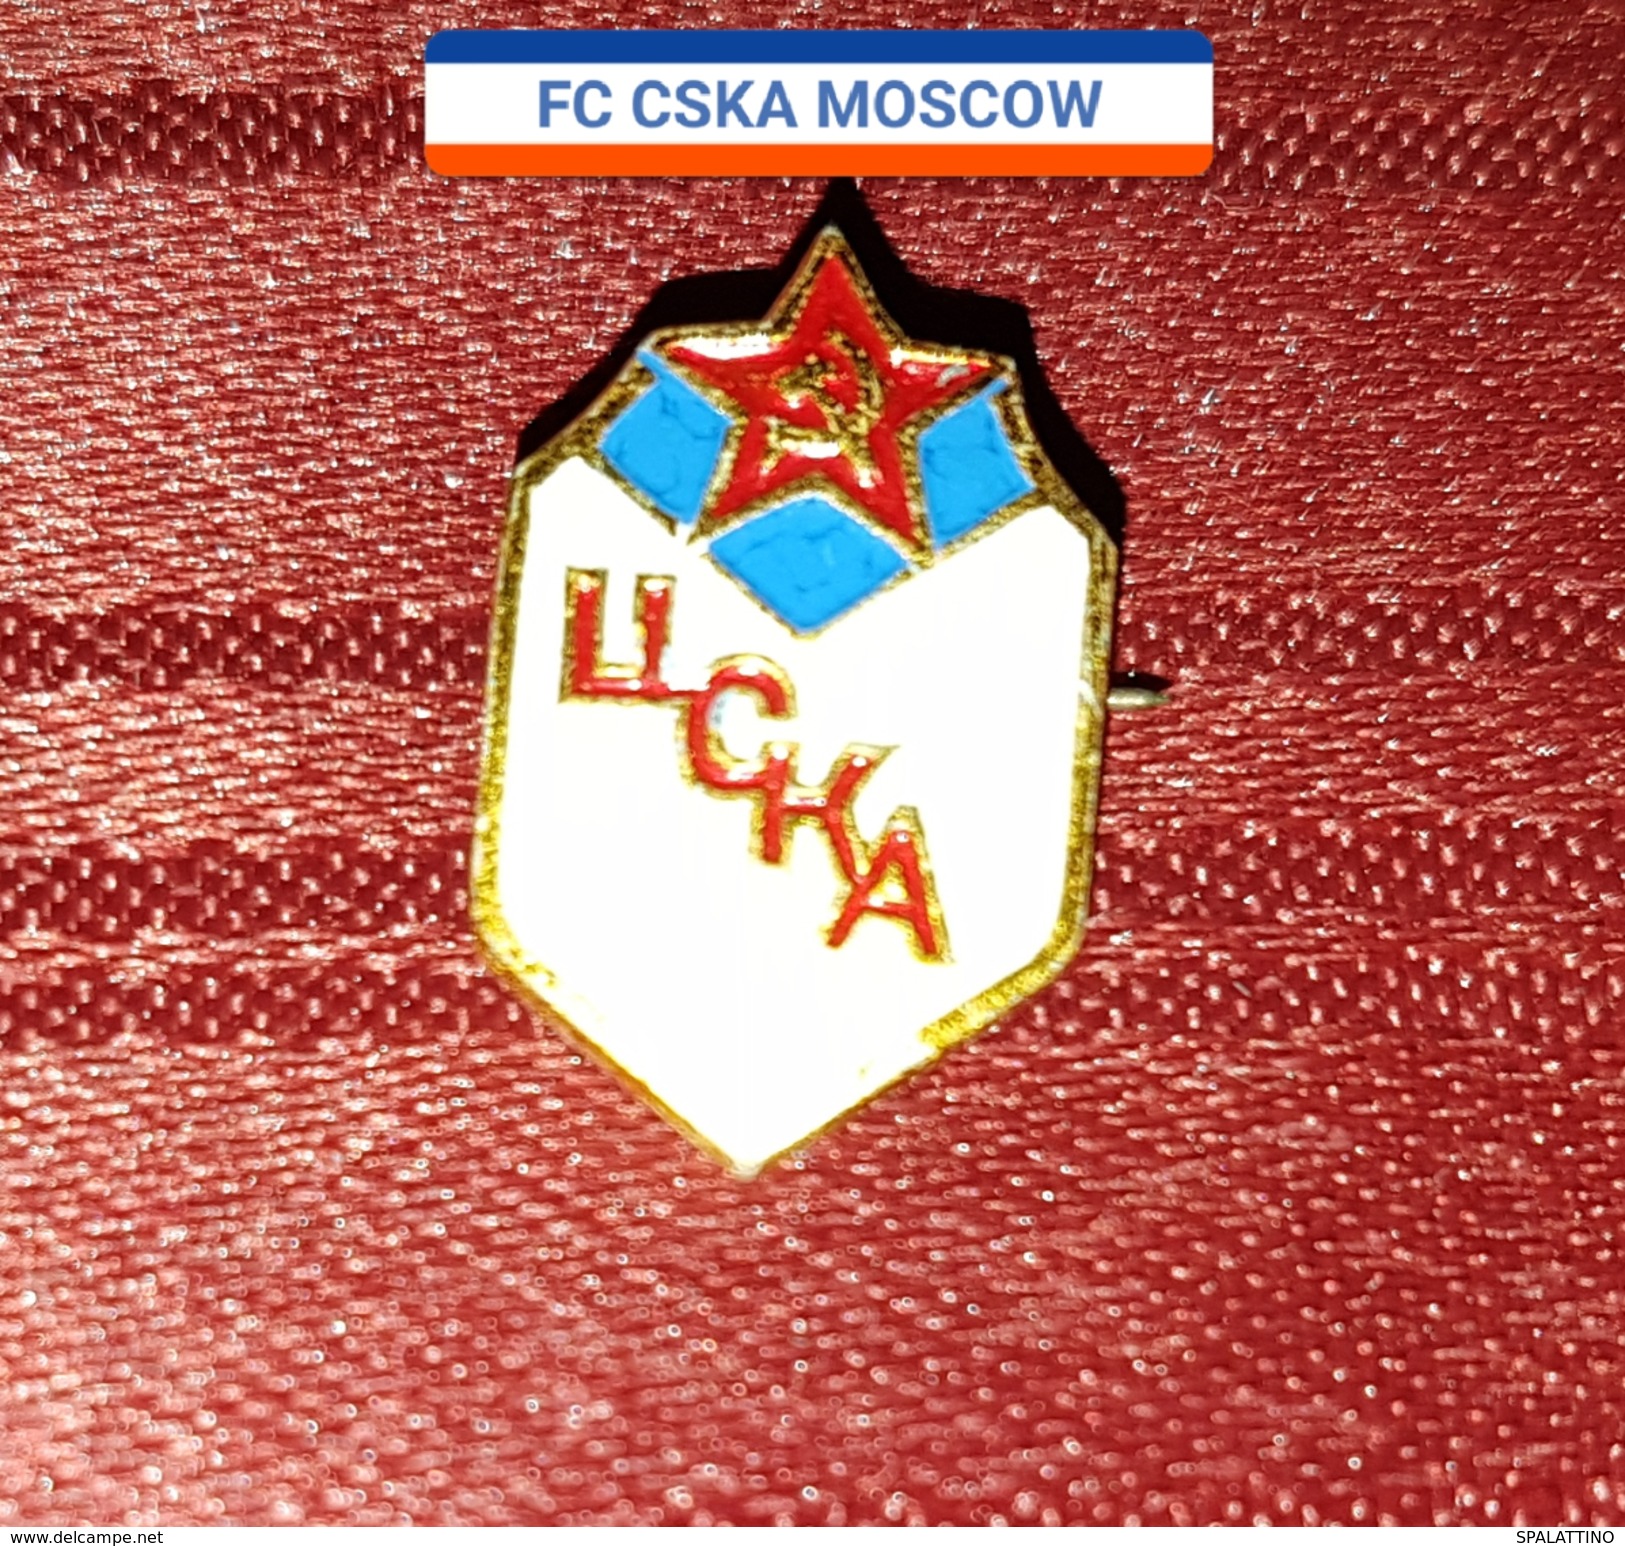 FC CSKA MOSCOW RUSSIA, SOVIET UNION, ORIGINAL OLD VINTAGE PIN BADGE FOOTBALL SOCCER - Fútbol